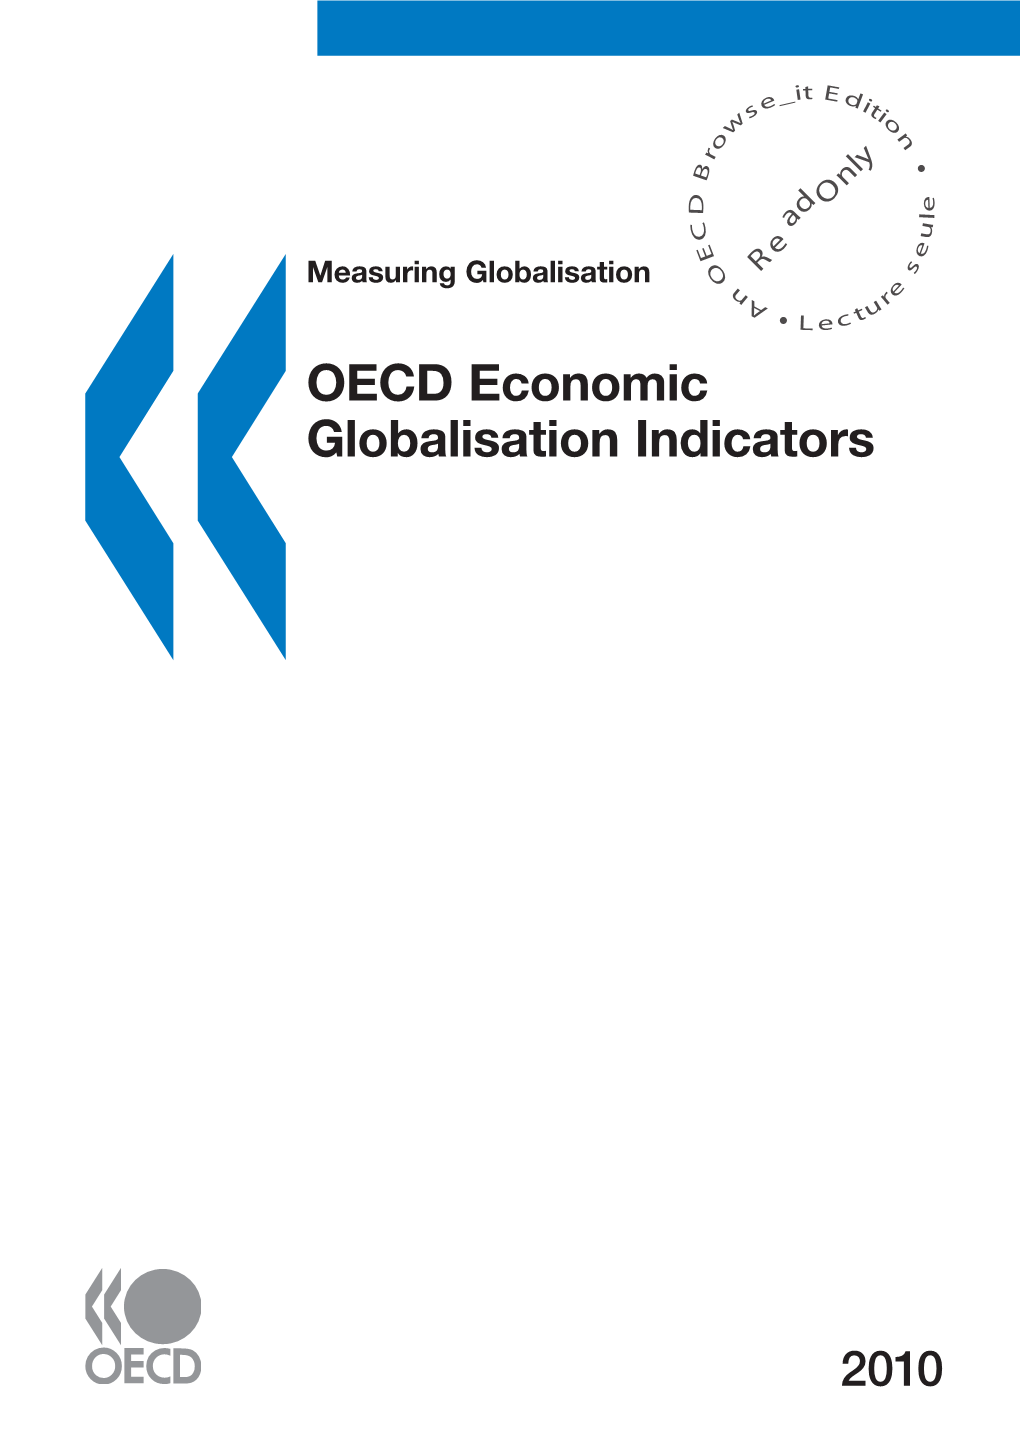 OECD Economic Globalisation Indicators 2010